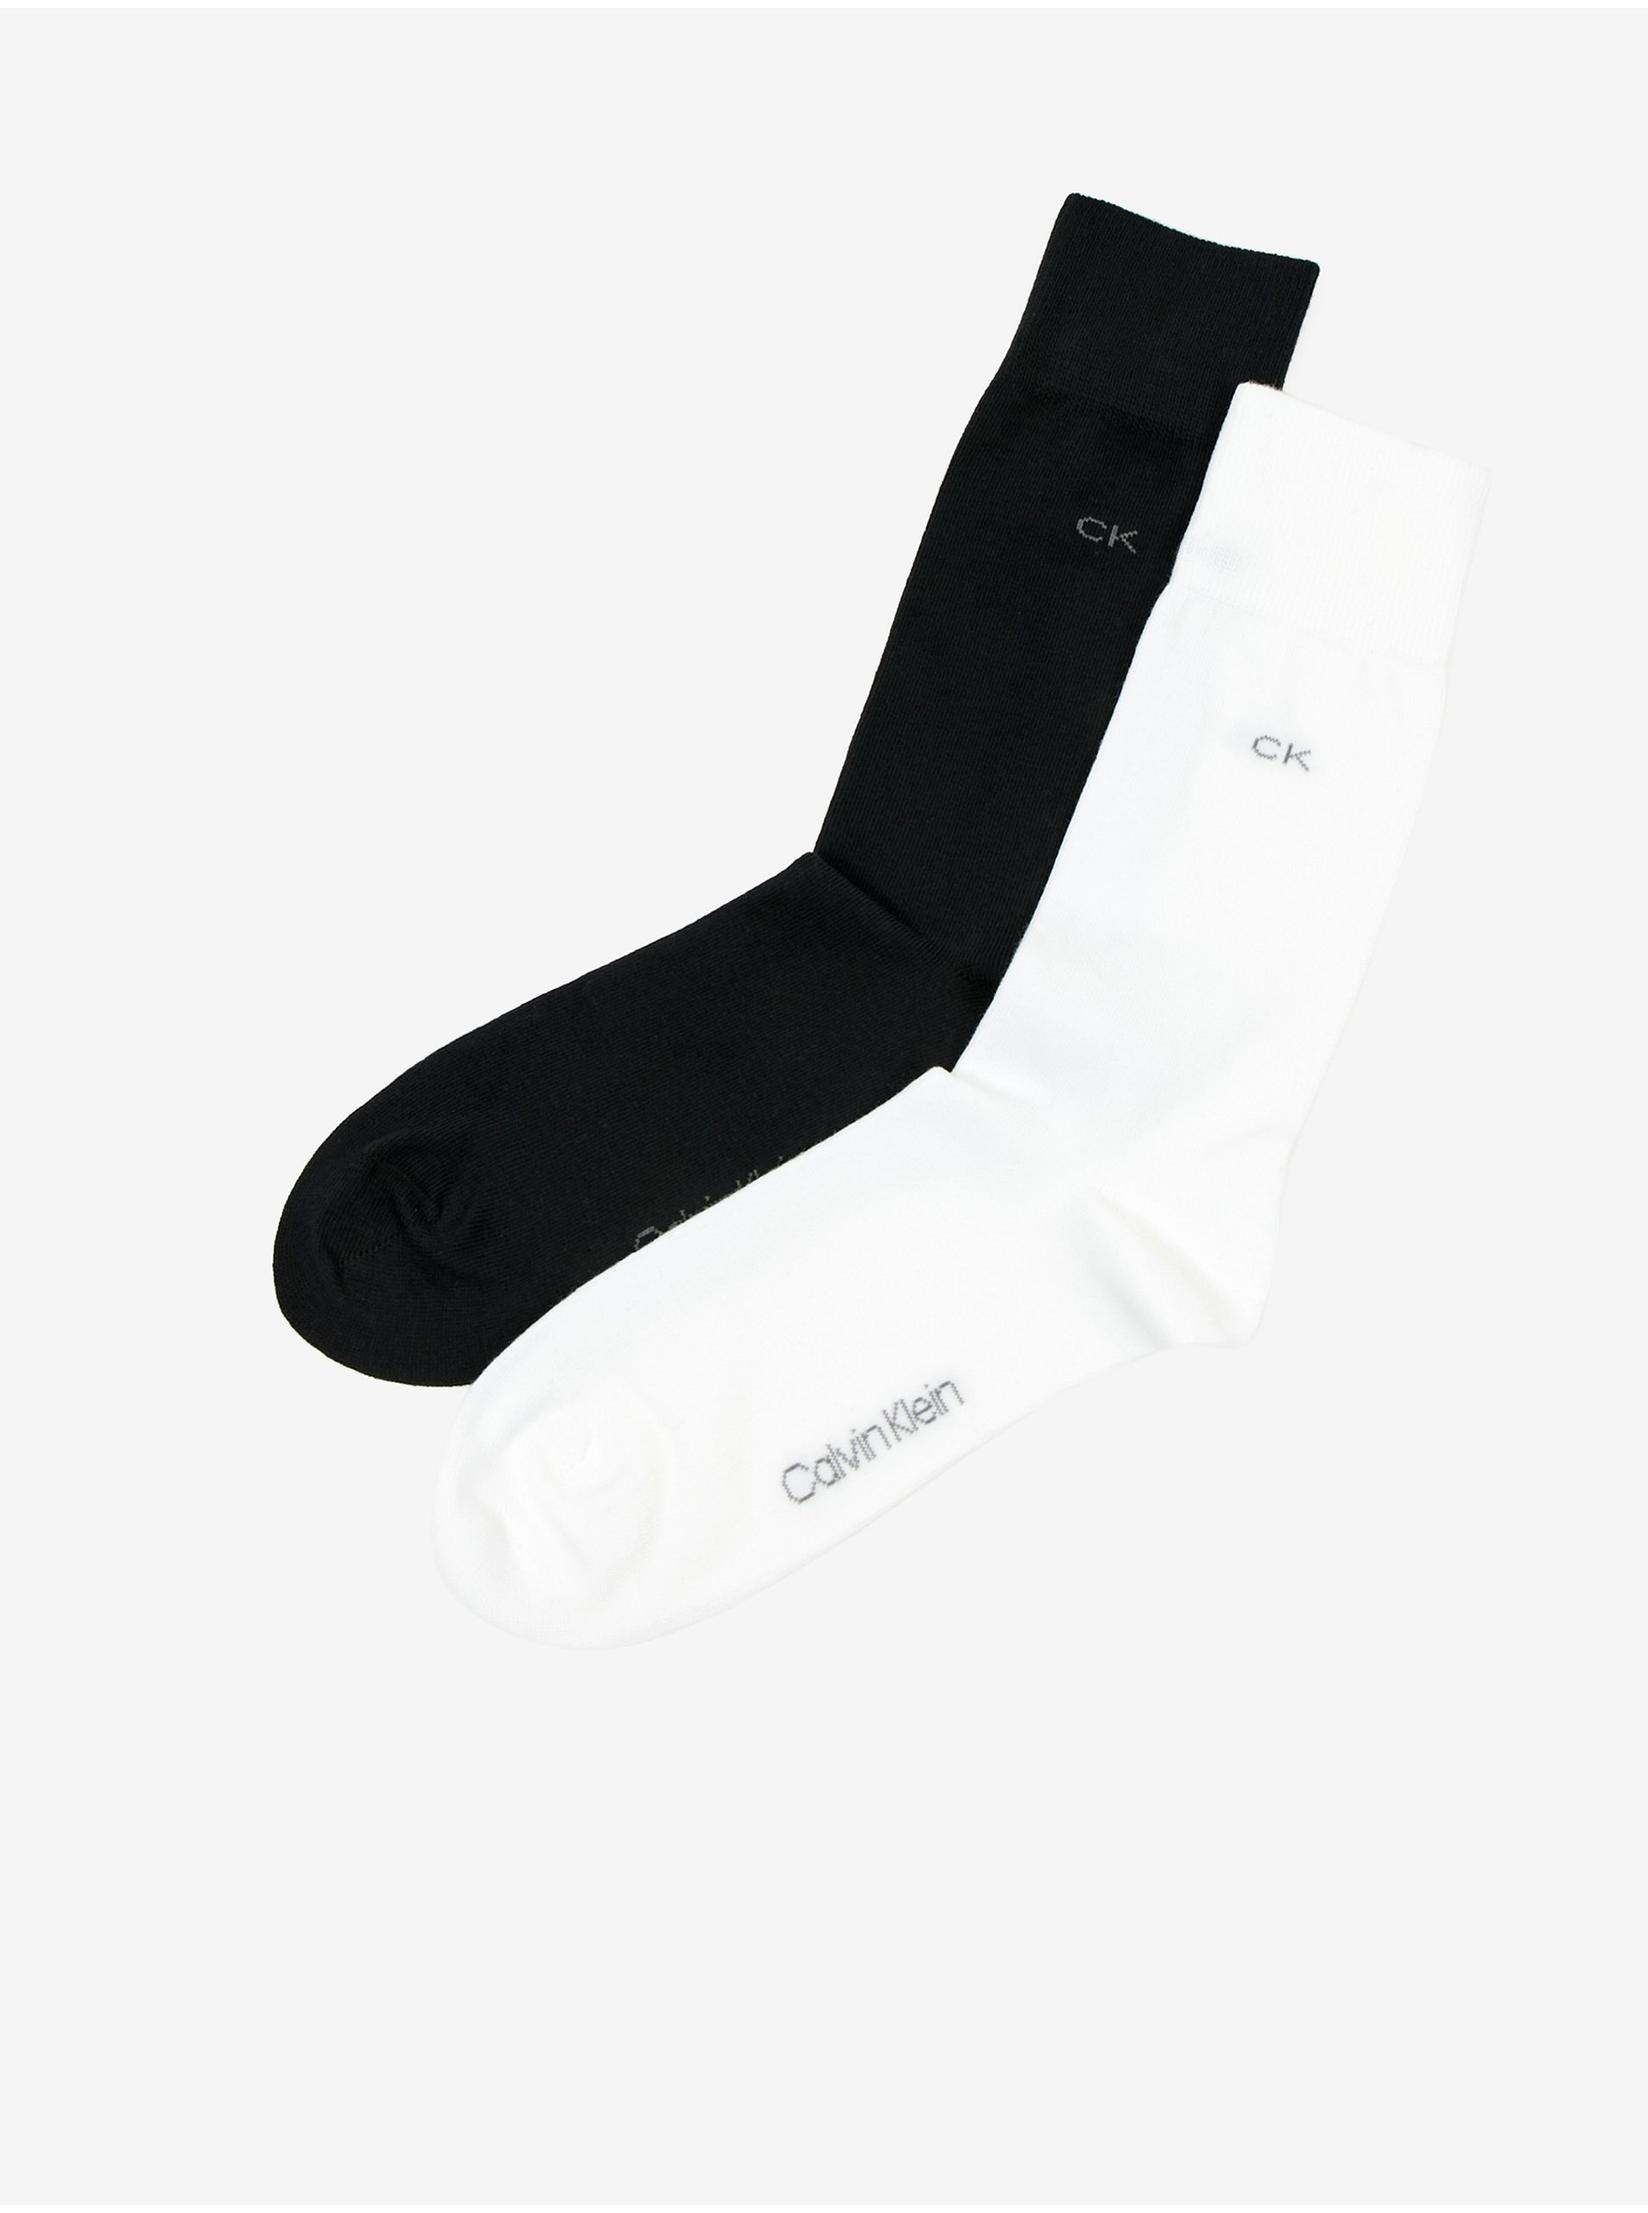 CALVIN KLEIN UNDERWEAR Muške čarape 2/1 crne i bele